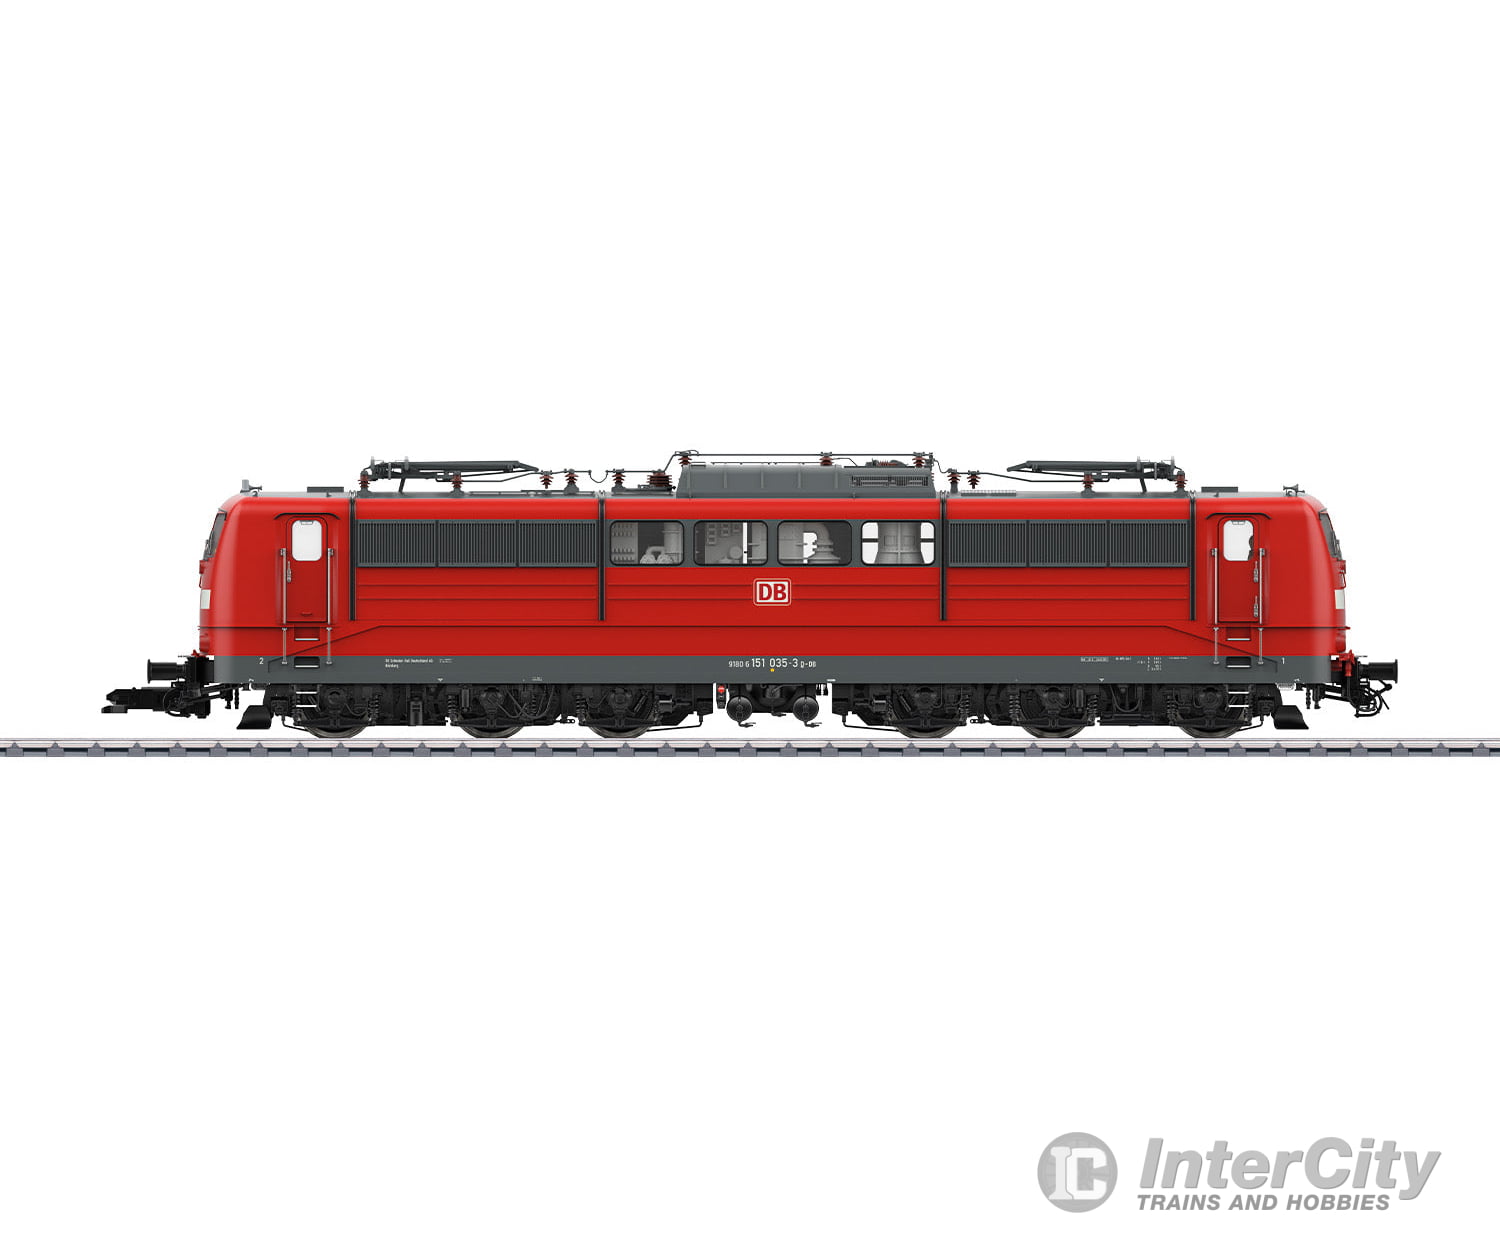 Marklin 55256 DB AG Class 151 Electric Locomotive - Default Title (IC-MARK-55256)